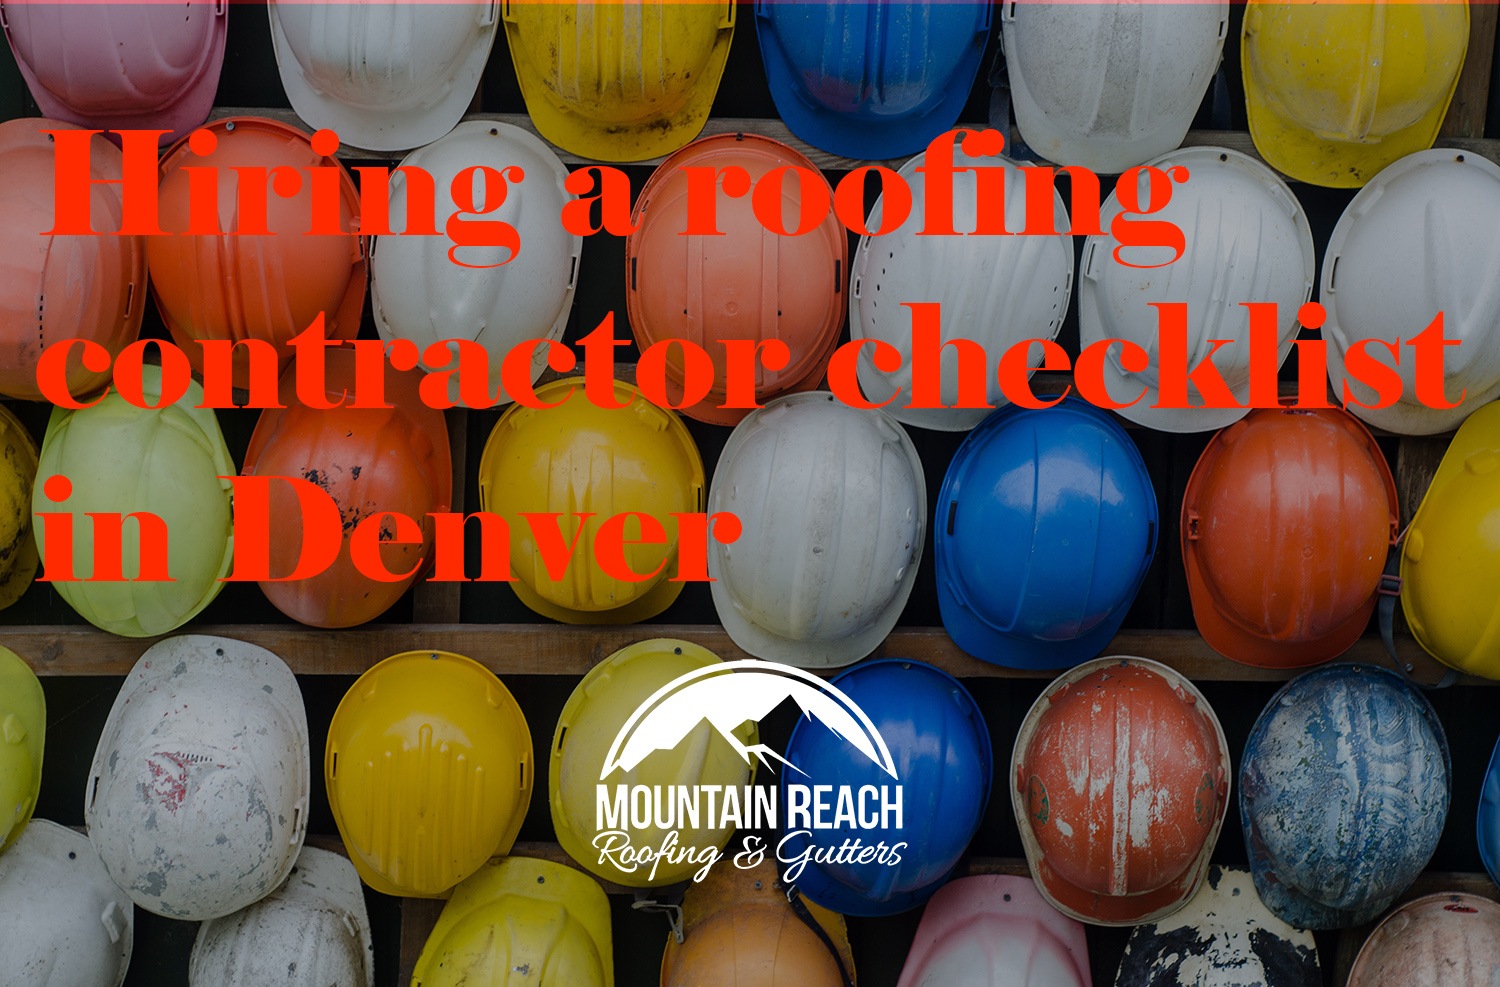 Hiring a roofing contractor checklist in Denver